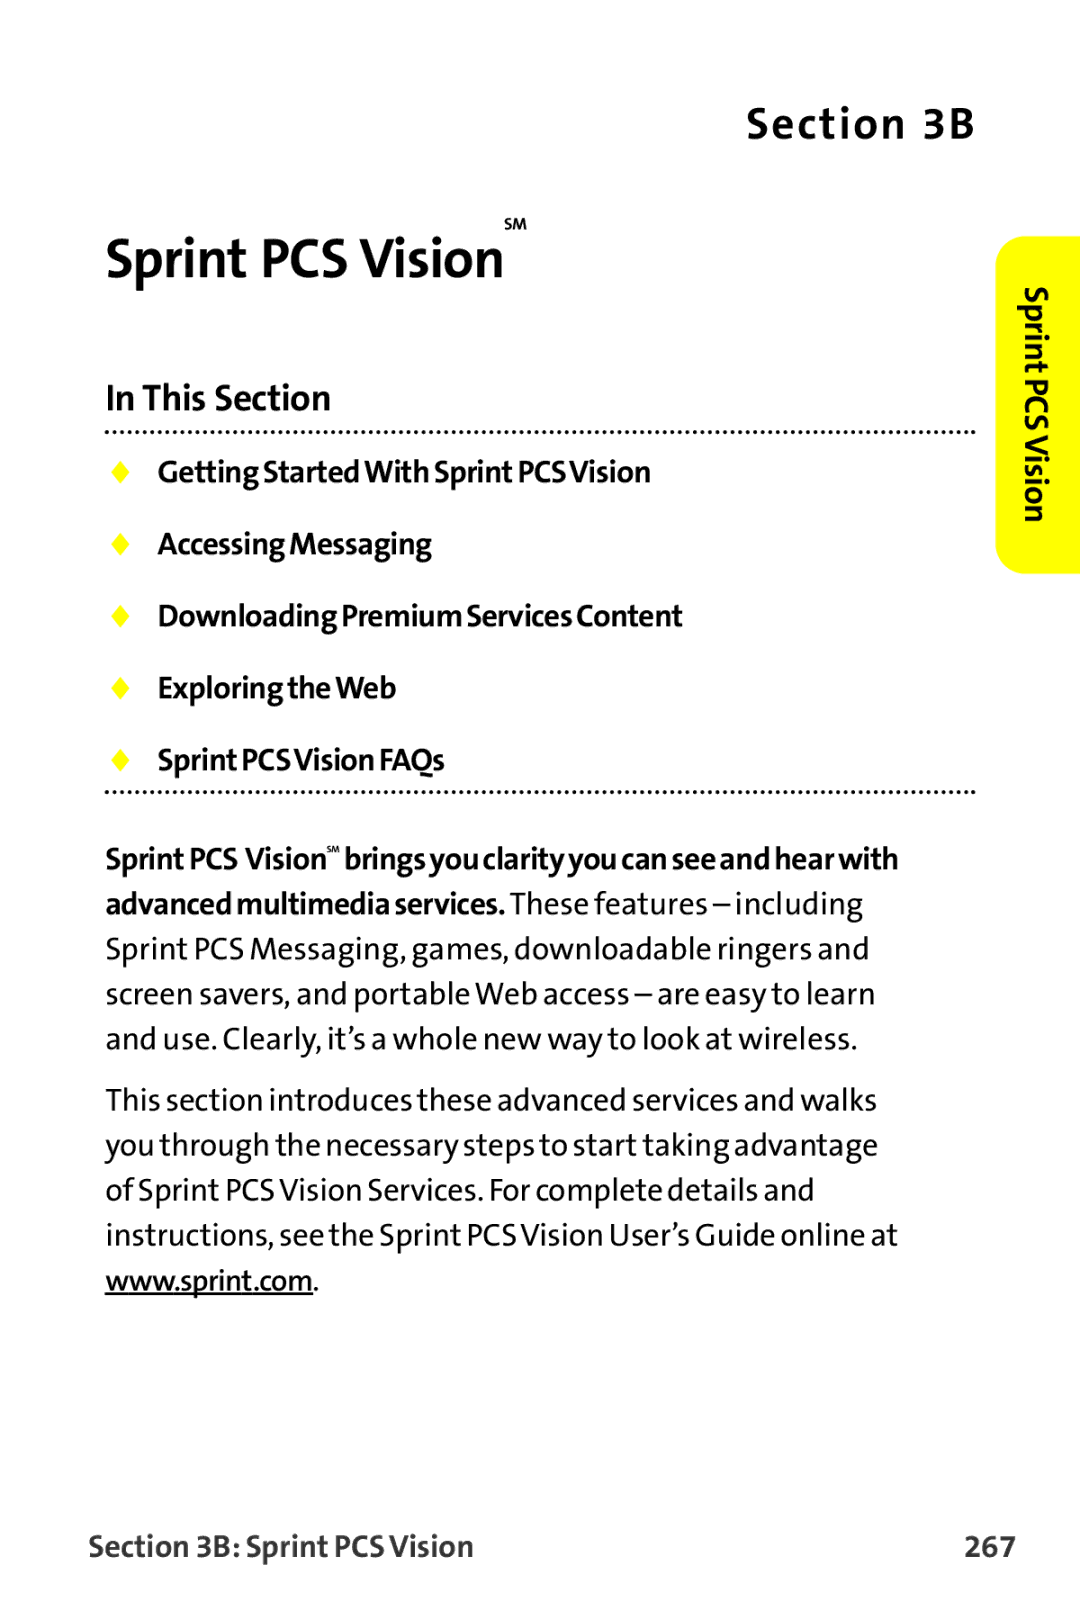 Sprint Nextel MM-7500 manual Sprint PCS Vision 267 